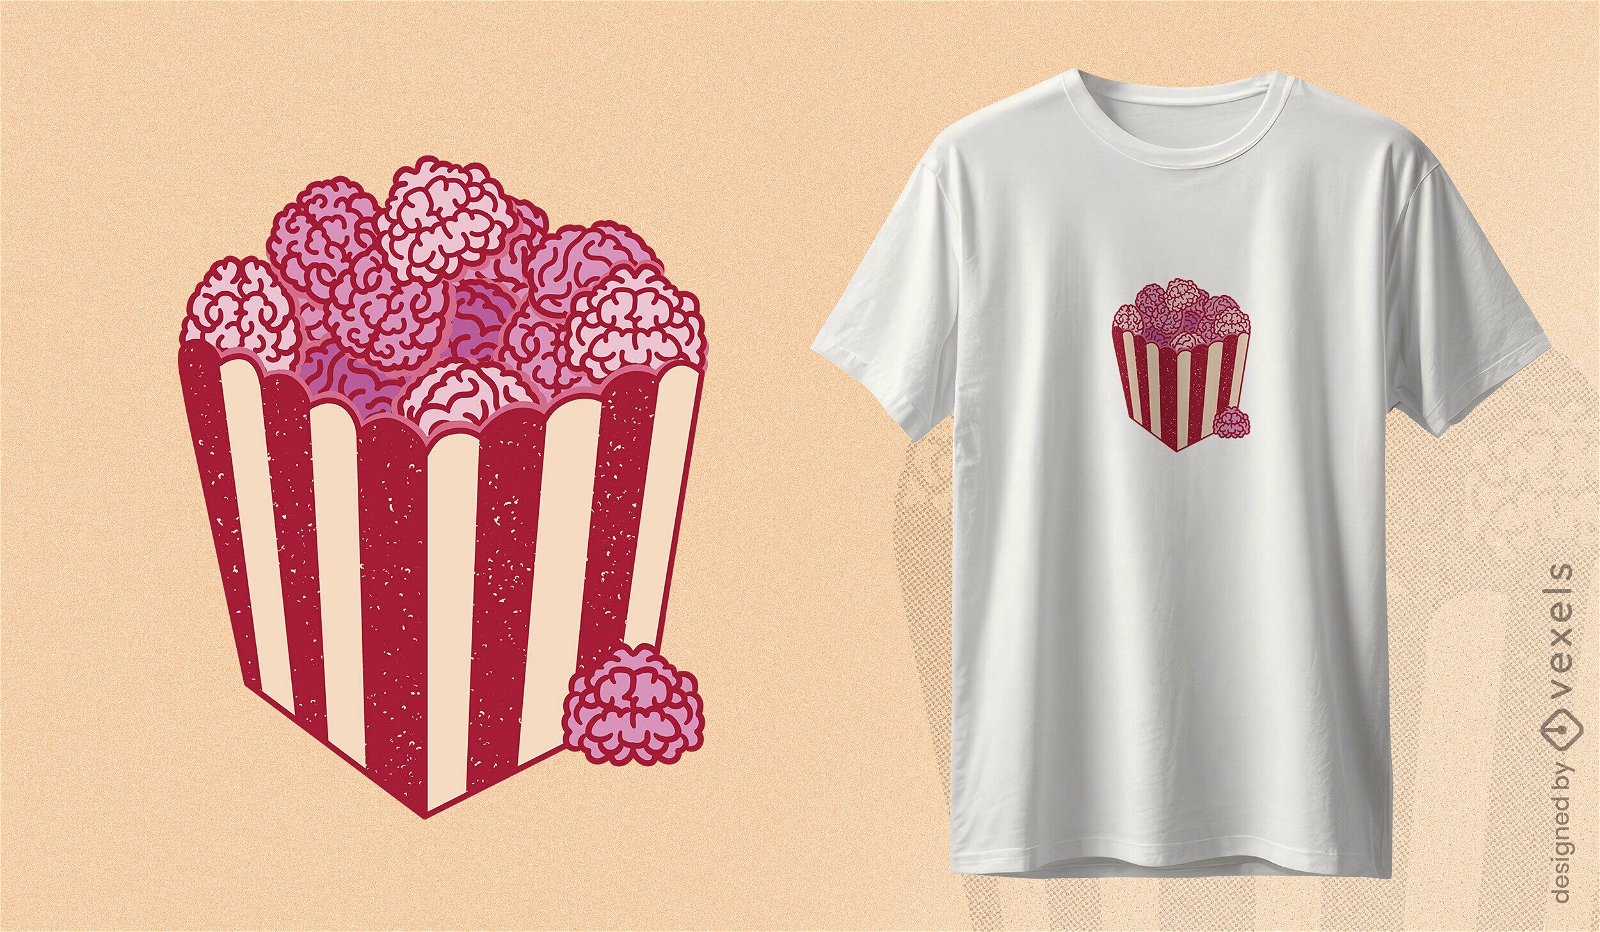 Brain popcorn t-shirt design